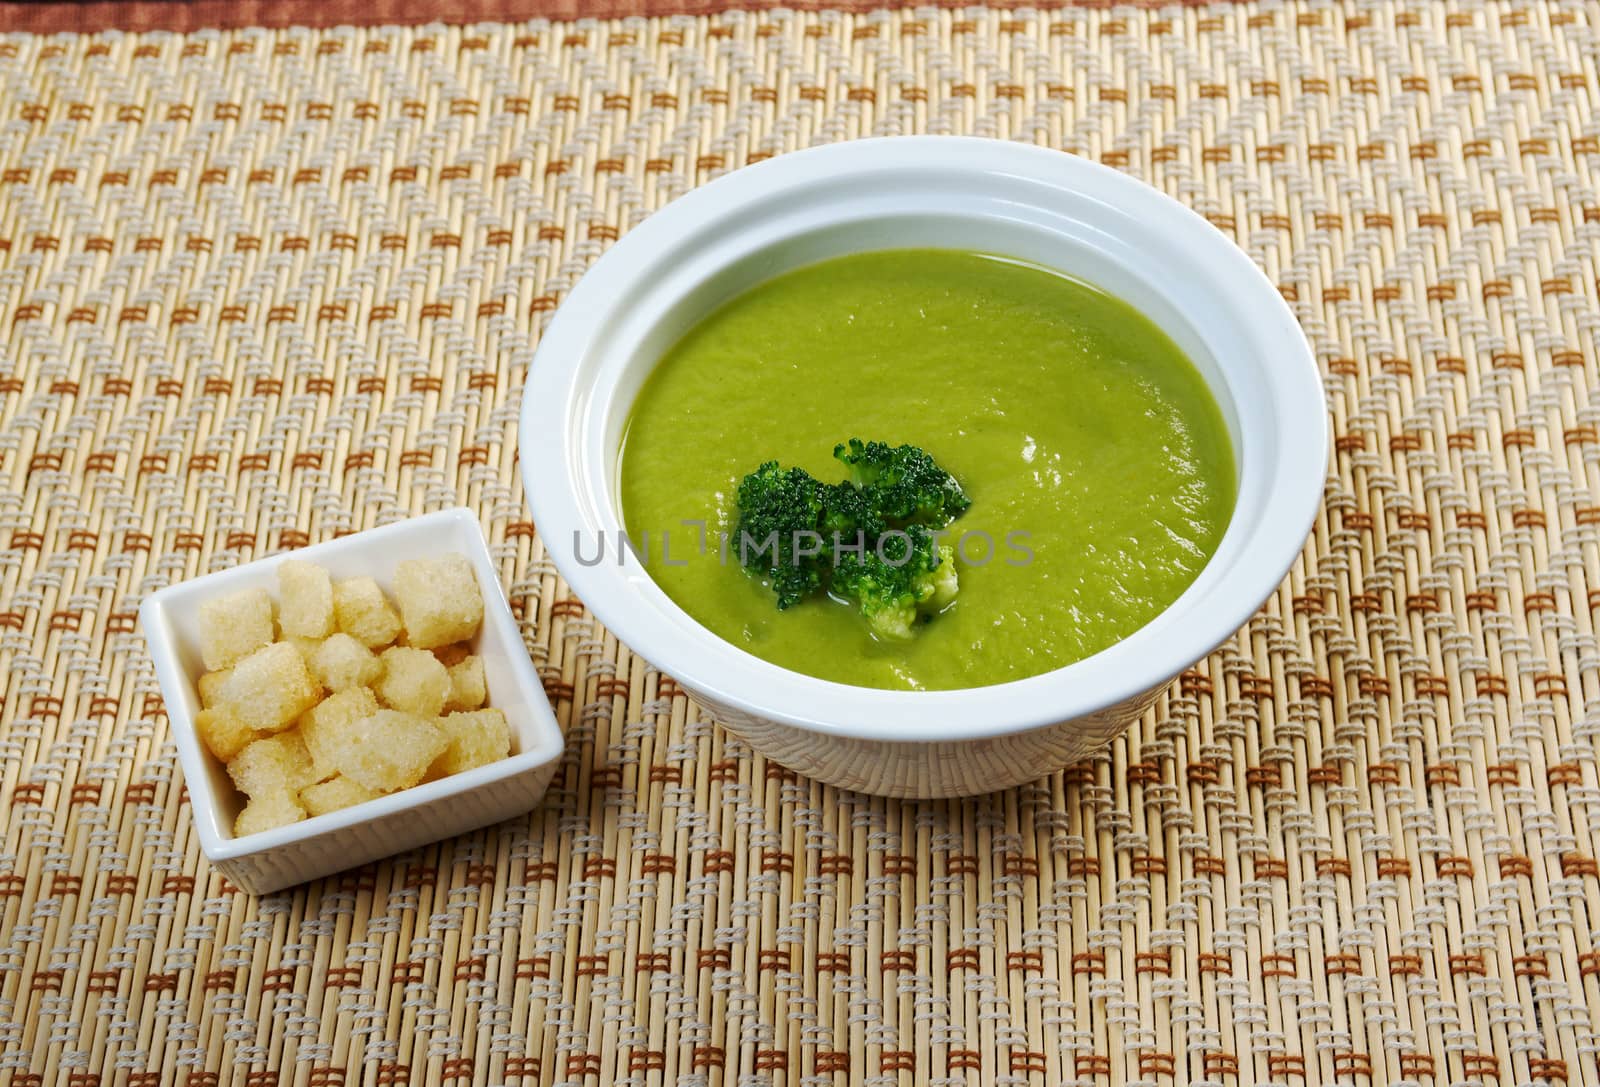 Creamy soup with broccoli by Fanfo